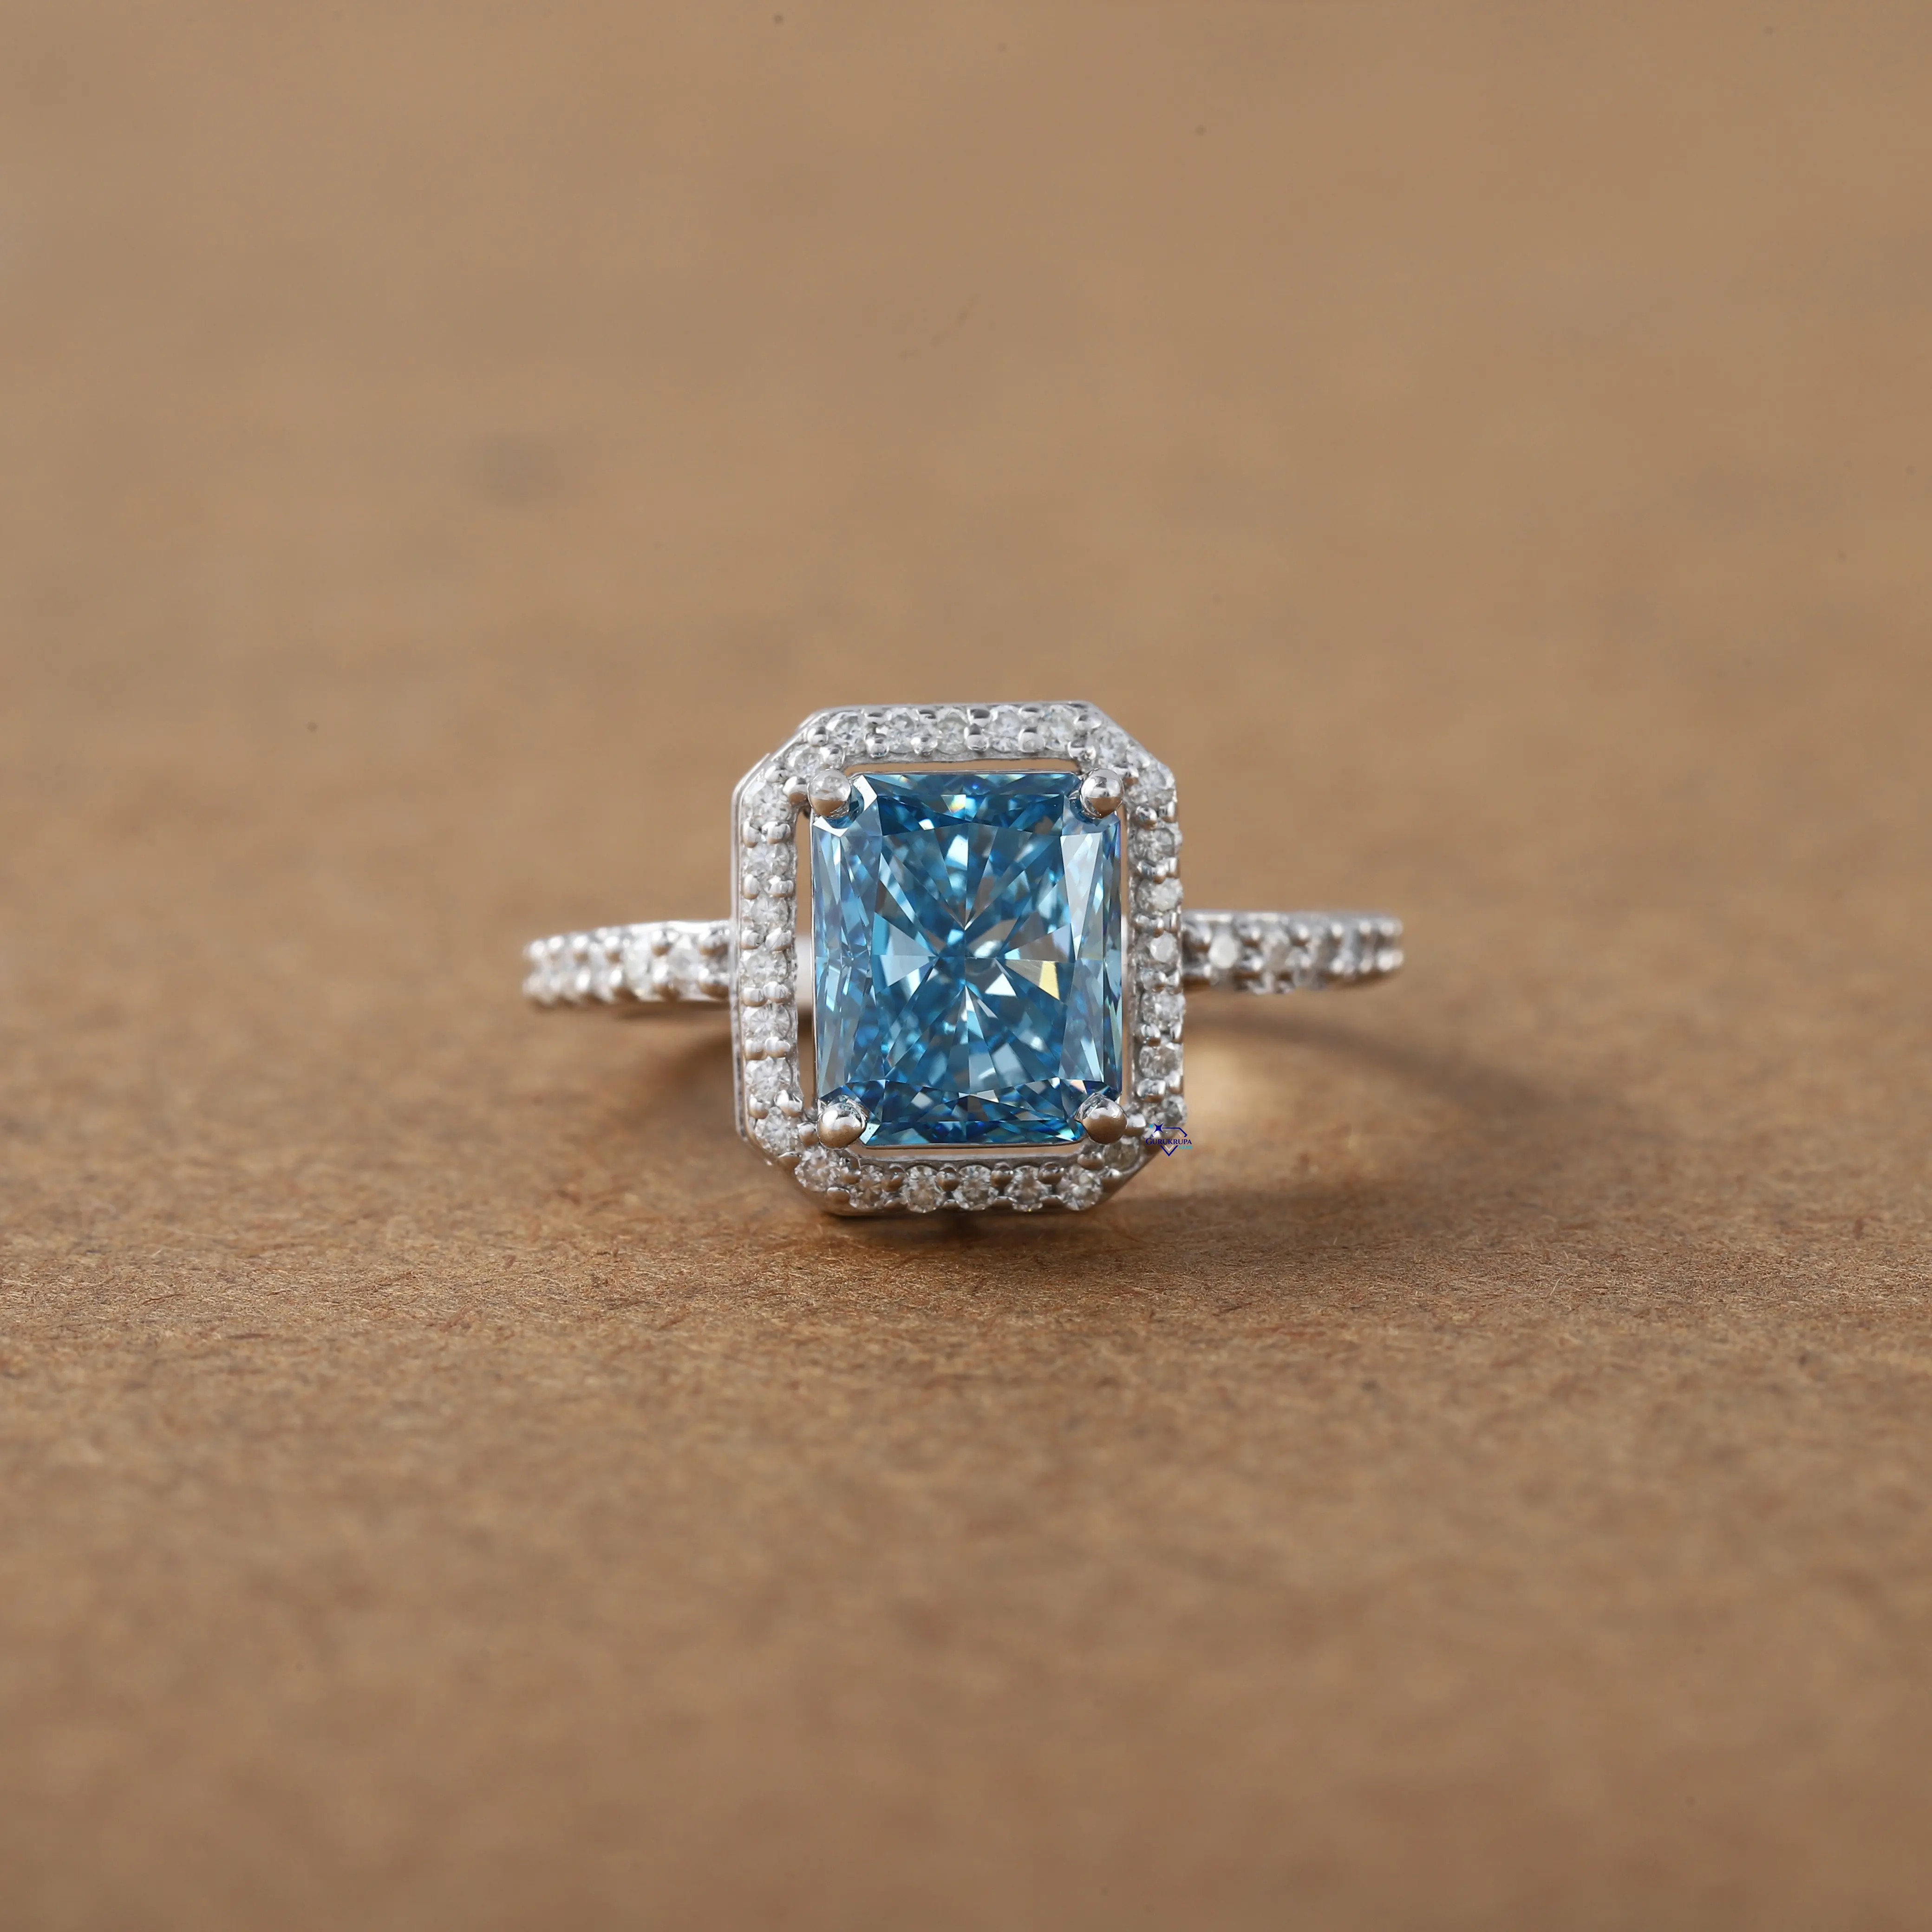 Mode dengan berlian moissanite emas putih 14kt potongan bercahaya biru trendi kami cincin pertunangan pilihan untuk wanita